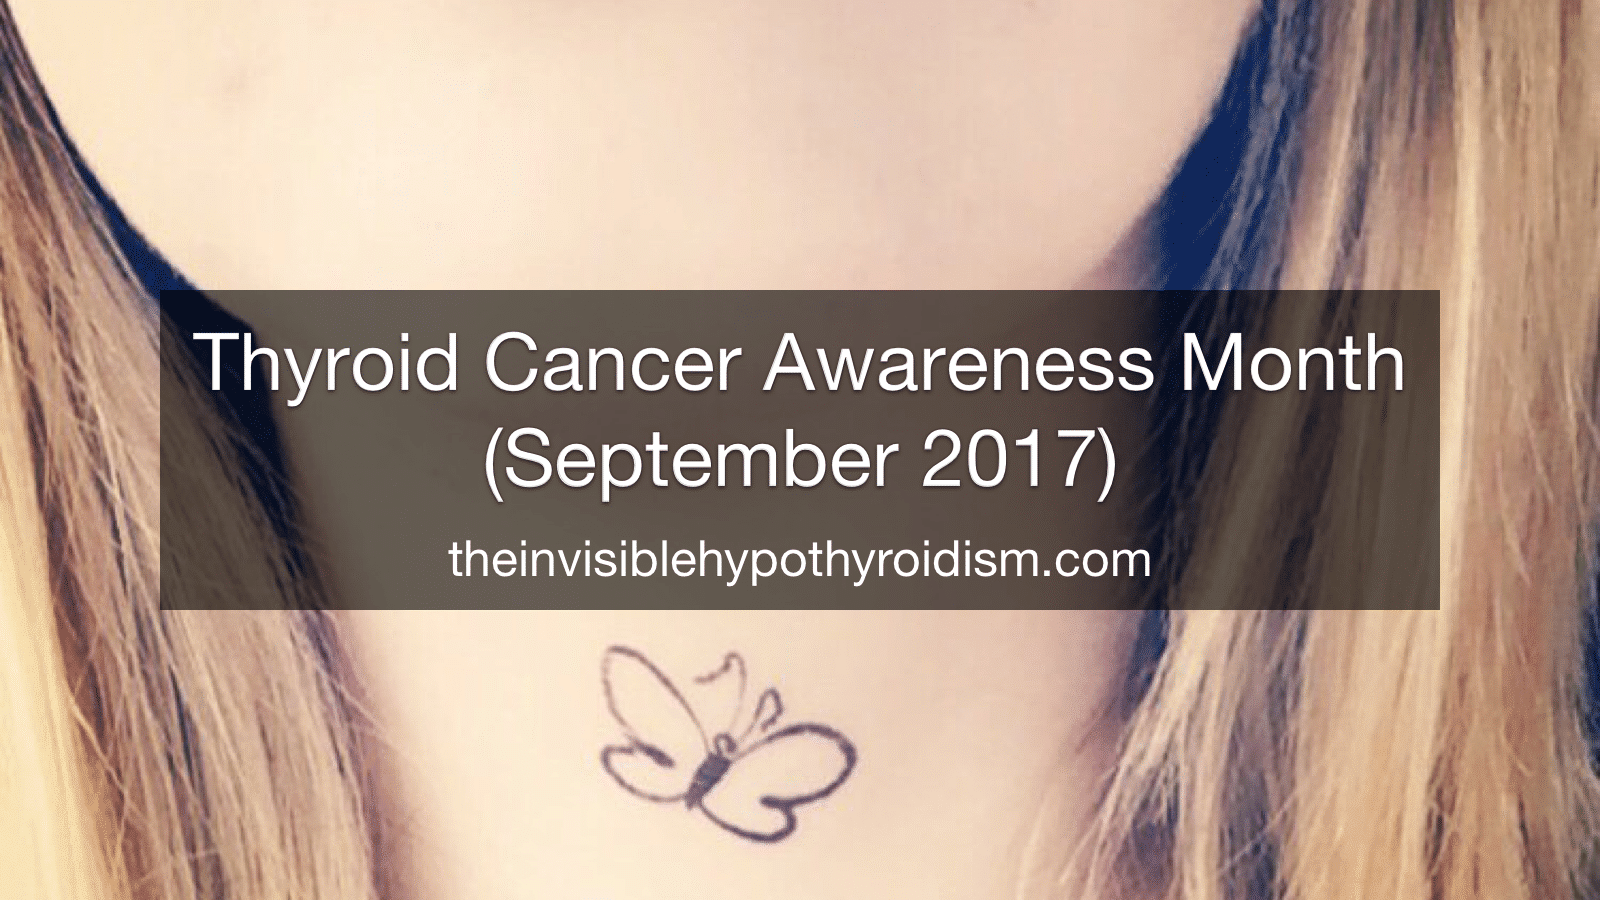 Thyroid Cancer Awareness Month - September 2017